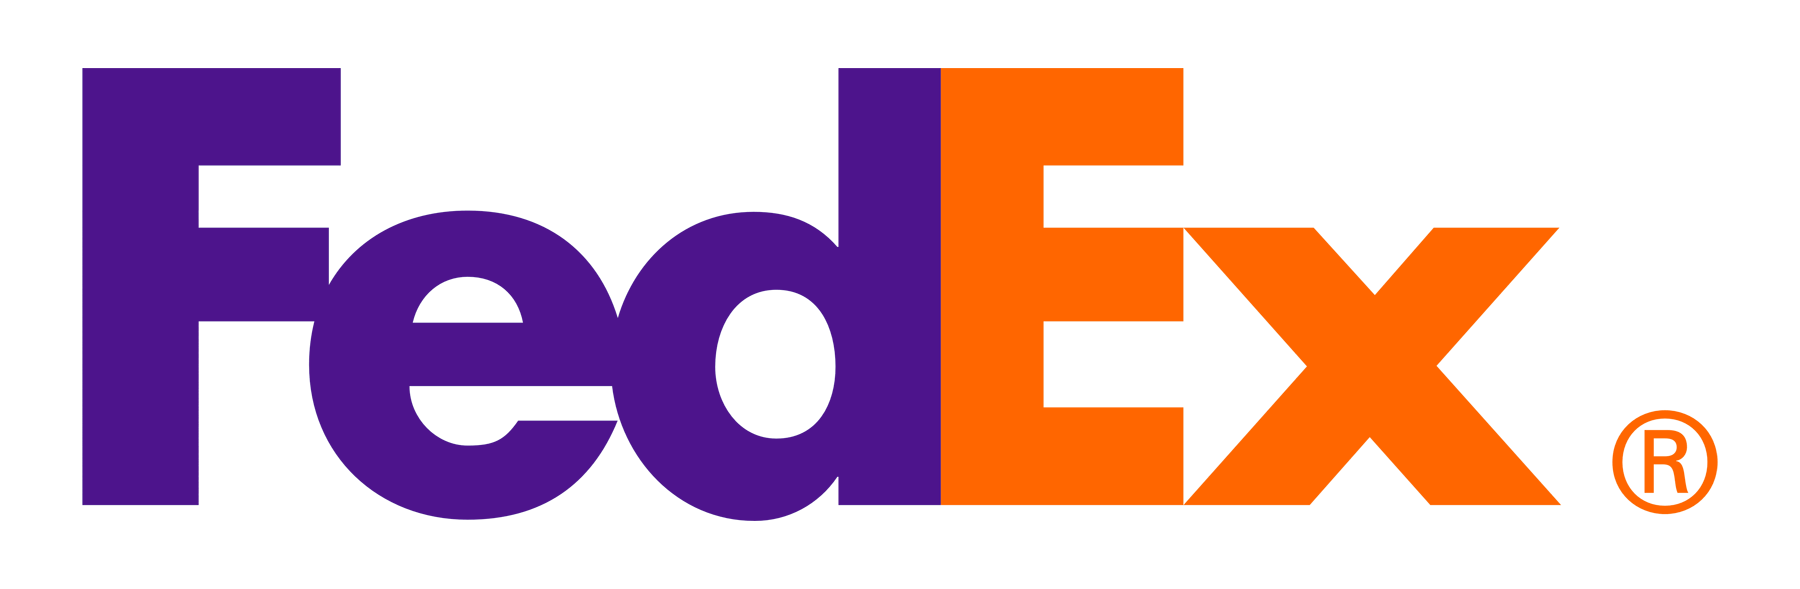 White FedEx Logo - FedEx Logo, FedEx Symbol, Meaning, History and Evolution